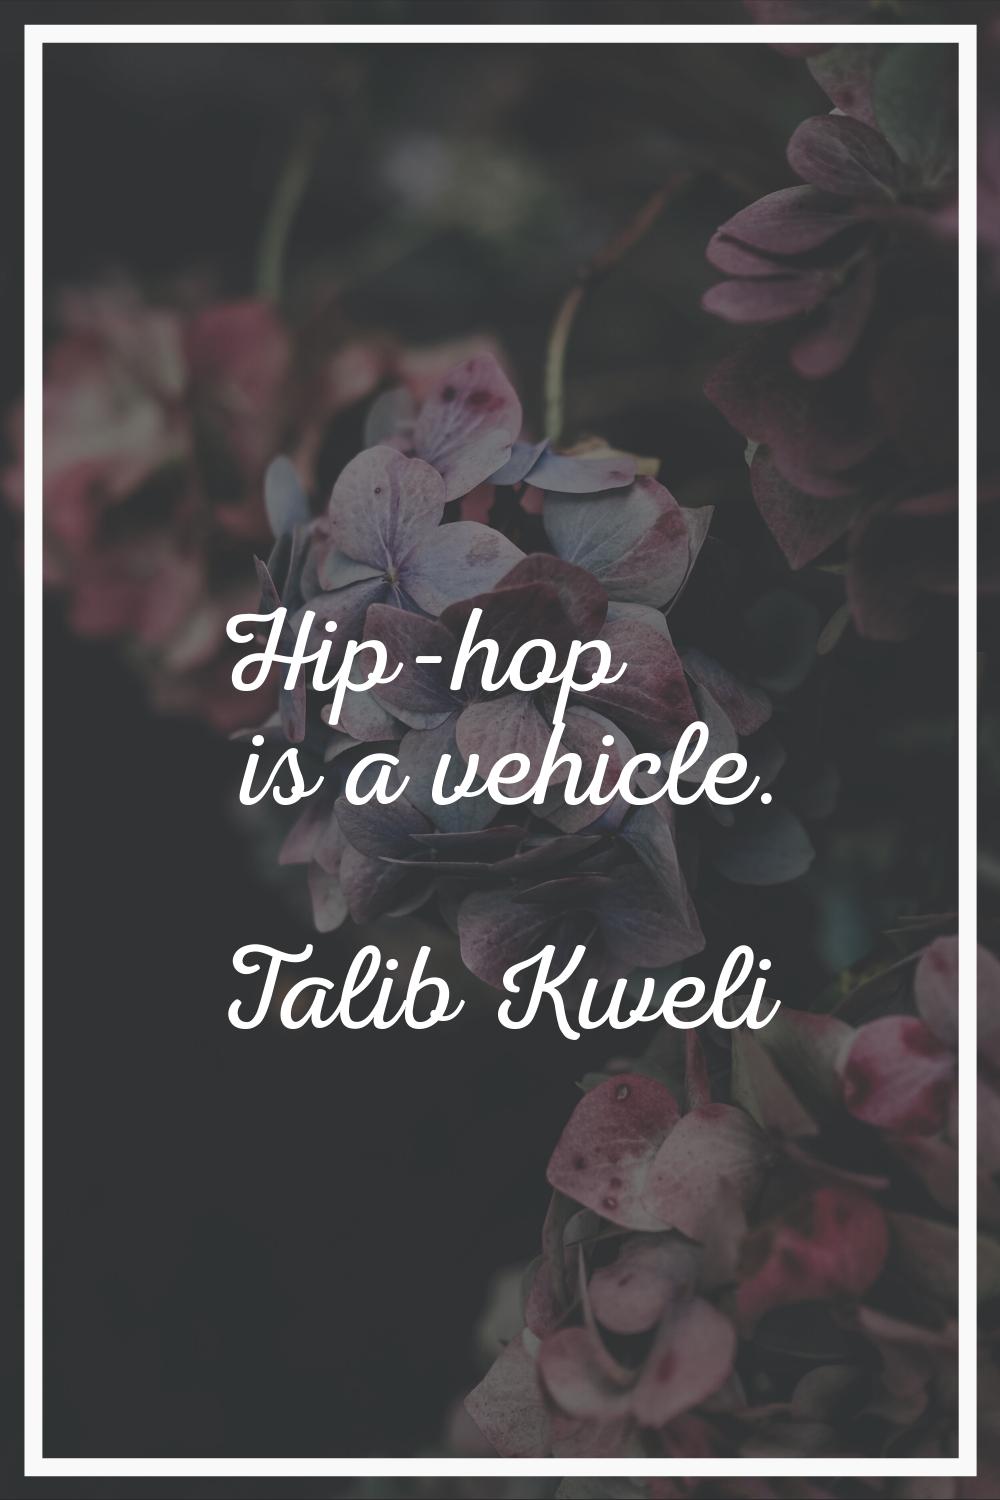 Hip-hop is a vehicle.